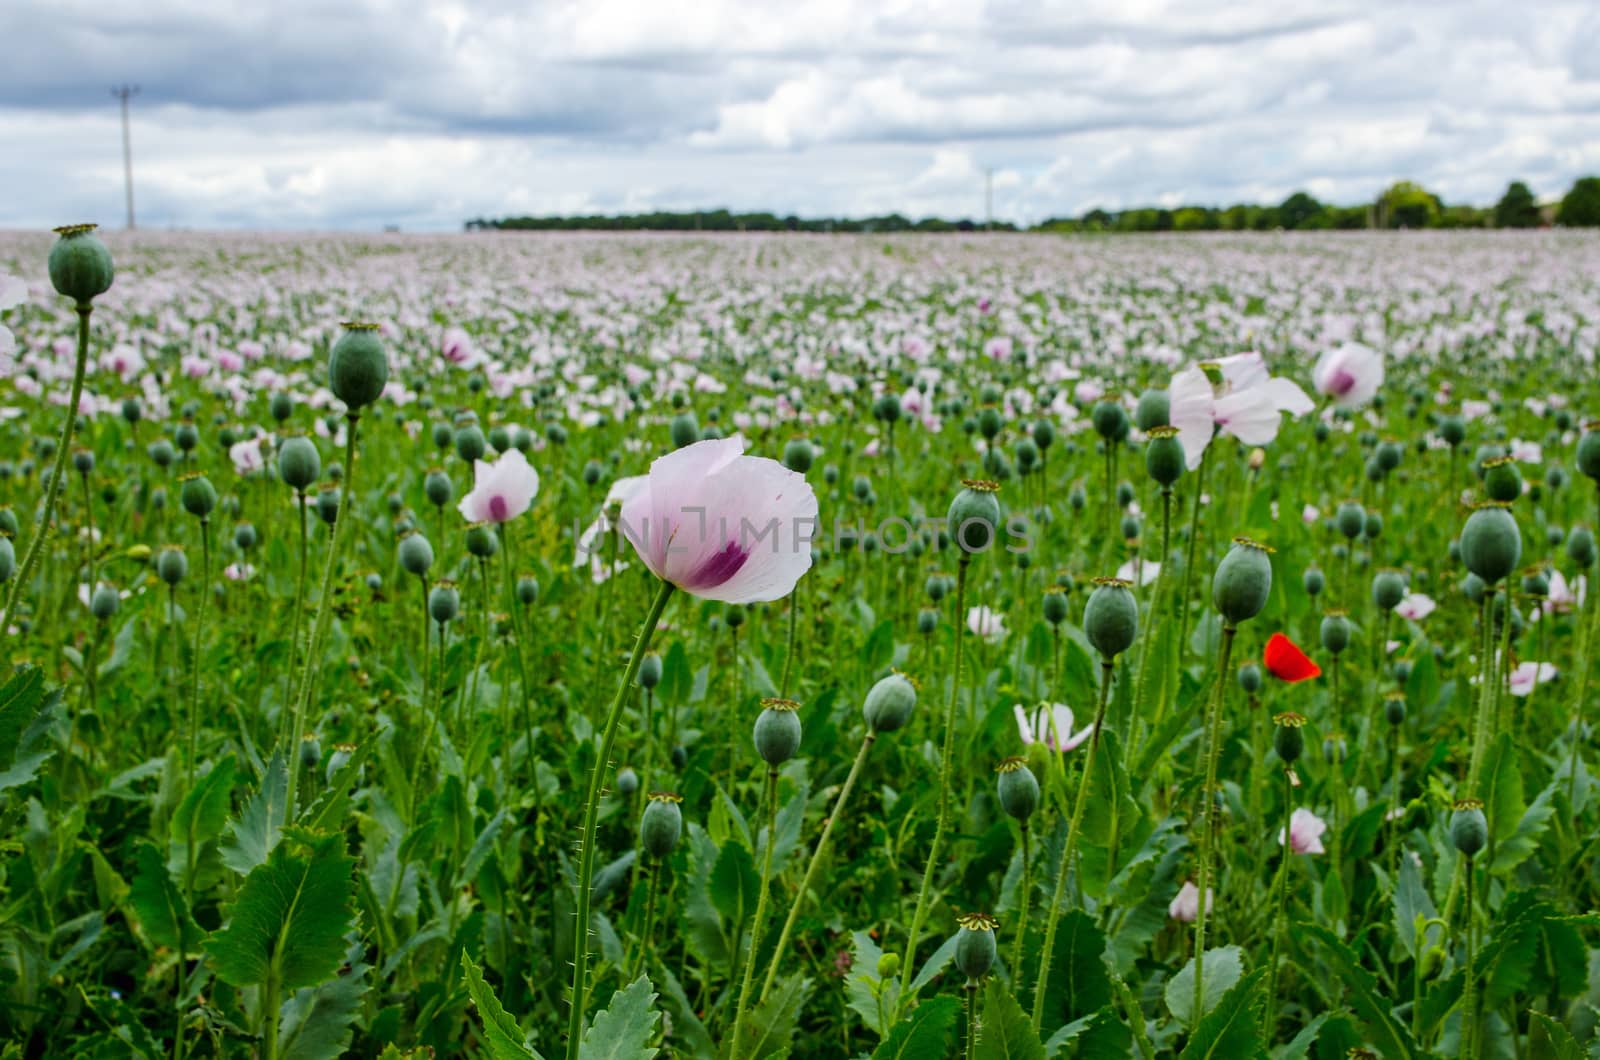 Edge of opium poppy field, Hampshire by BasPhoto